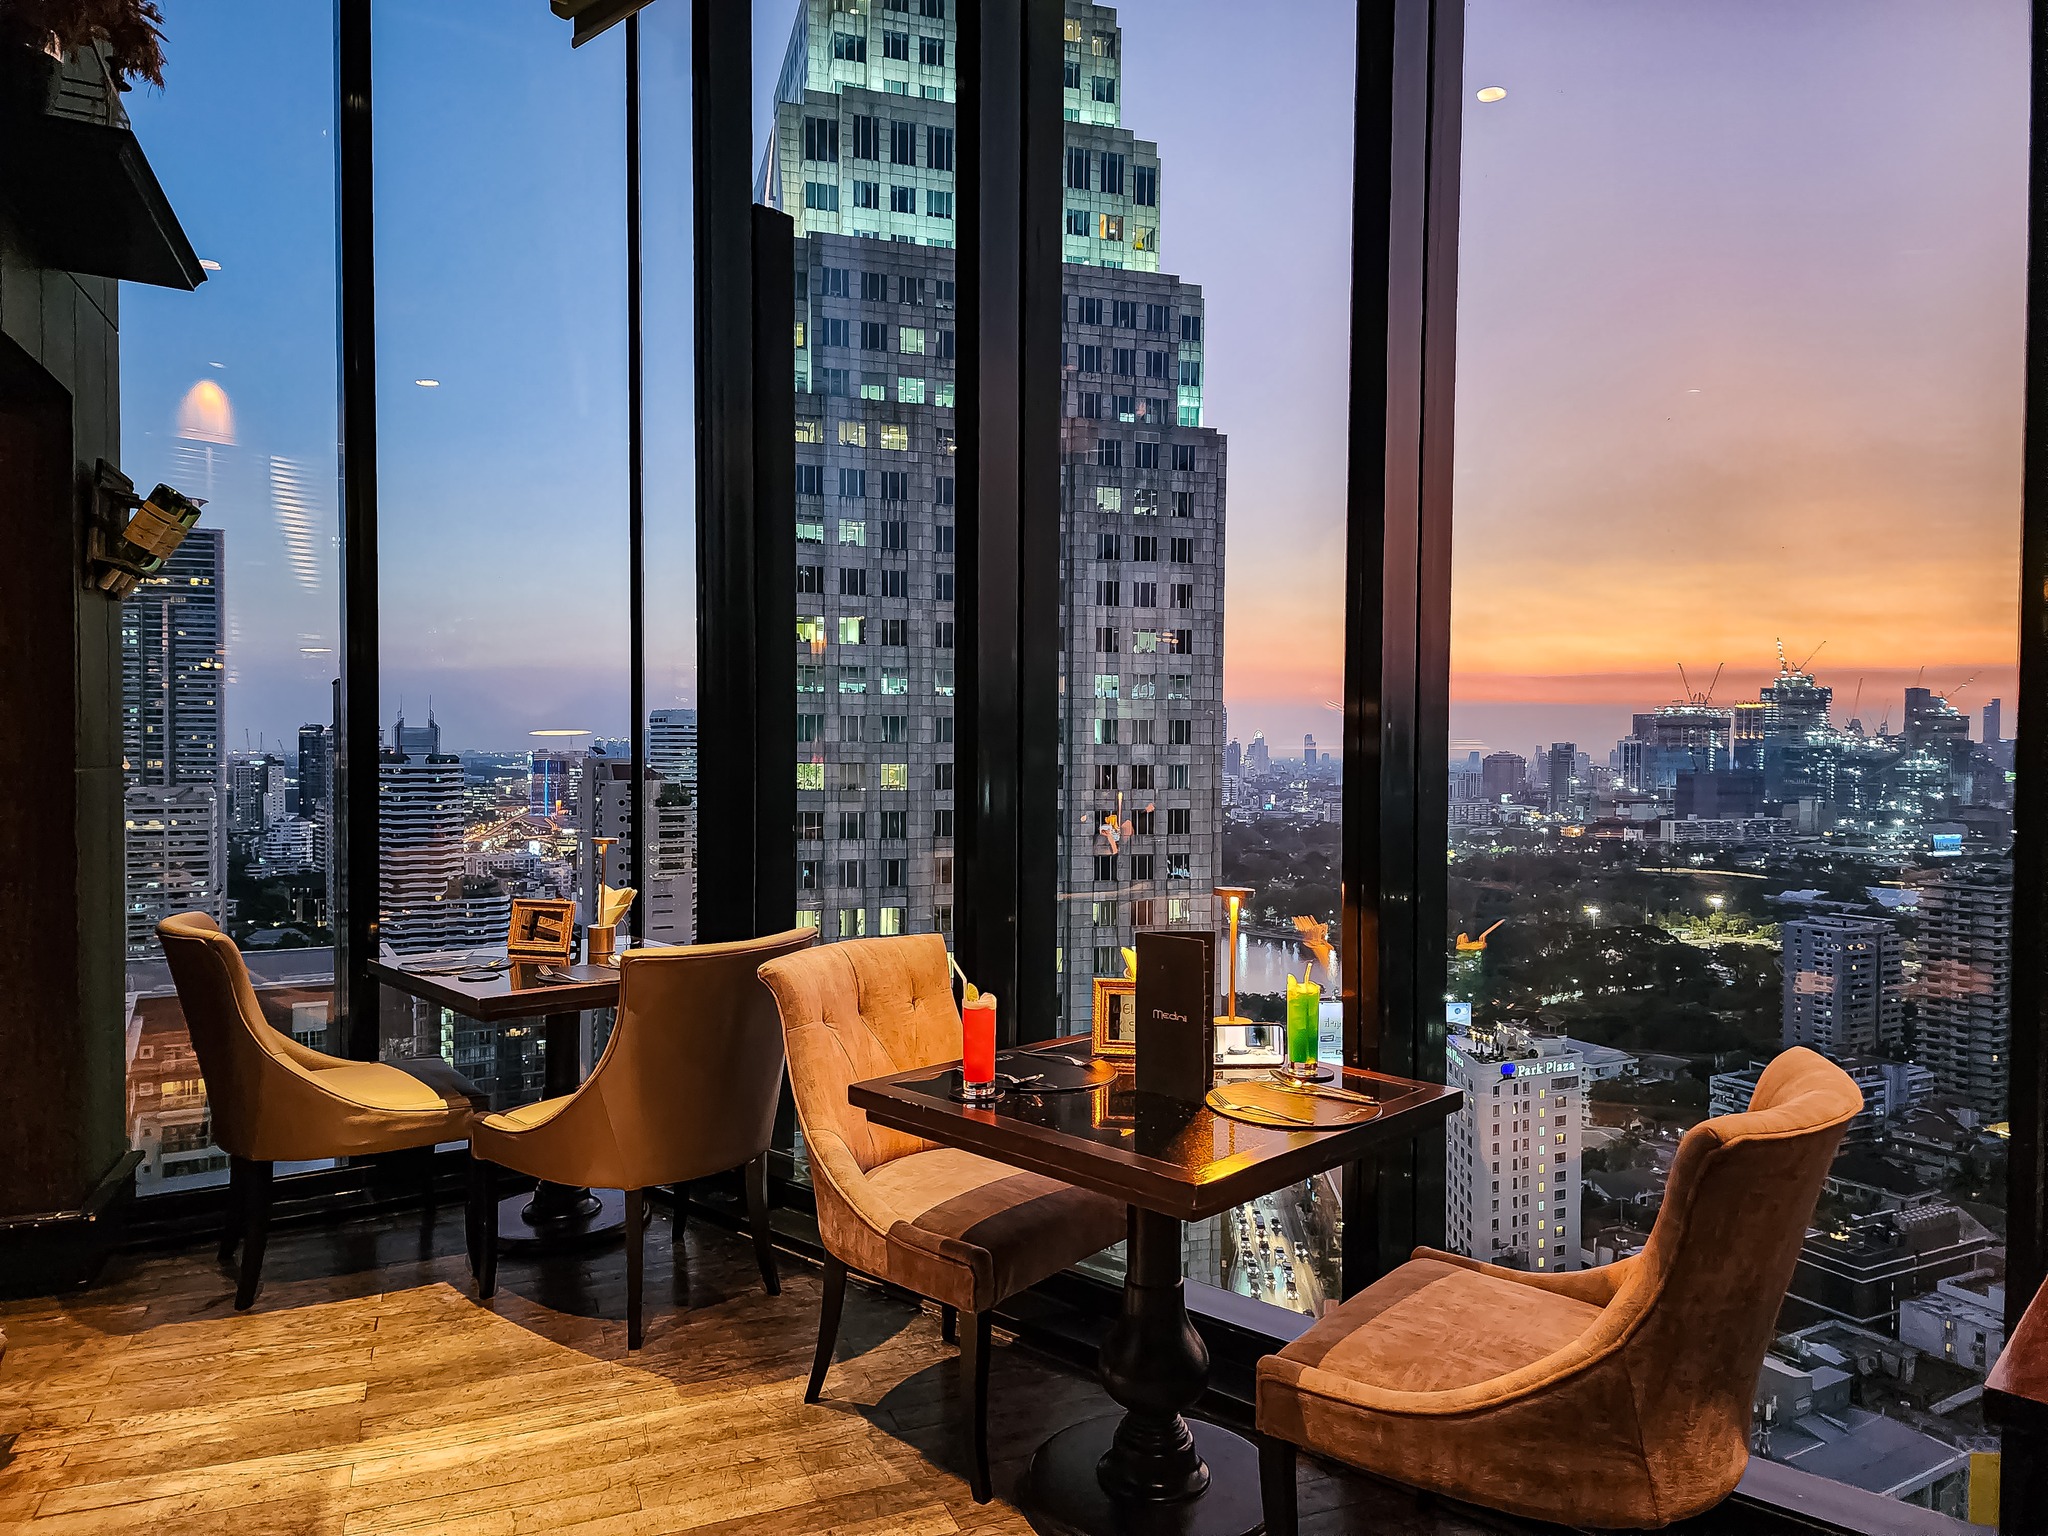 Medinii Panorama Restaurant in Bangkok